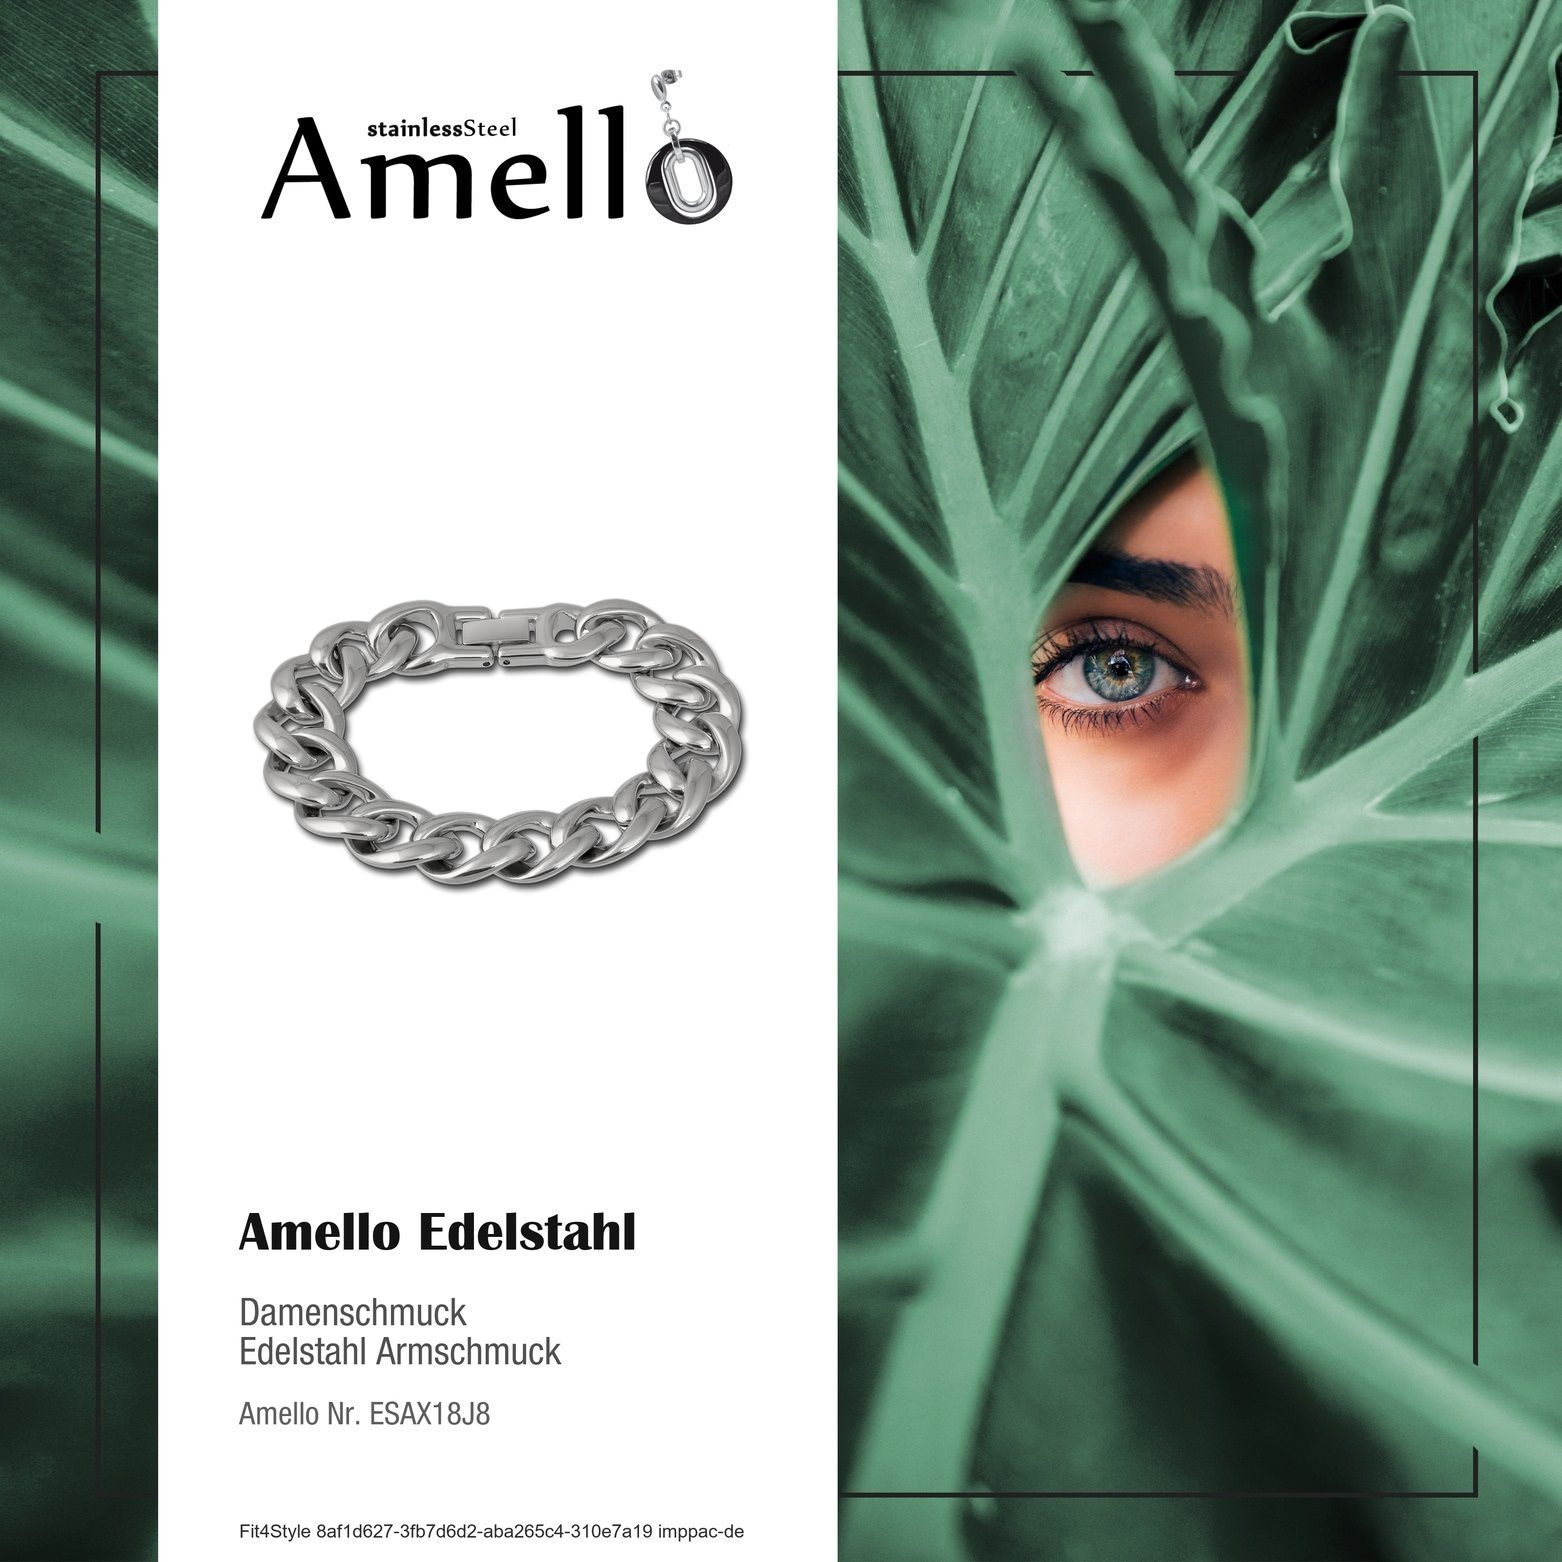 Amello für Edelstahlarmband Amello (Armband), (Stainless Damen Steel) silber Edelstahl Armbänder Panzer Armband